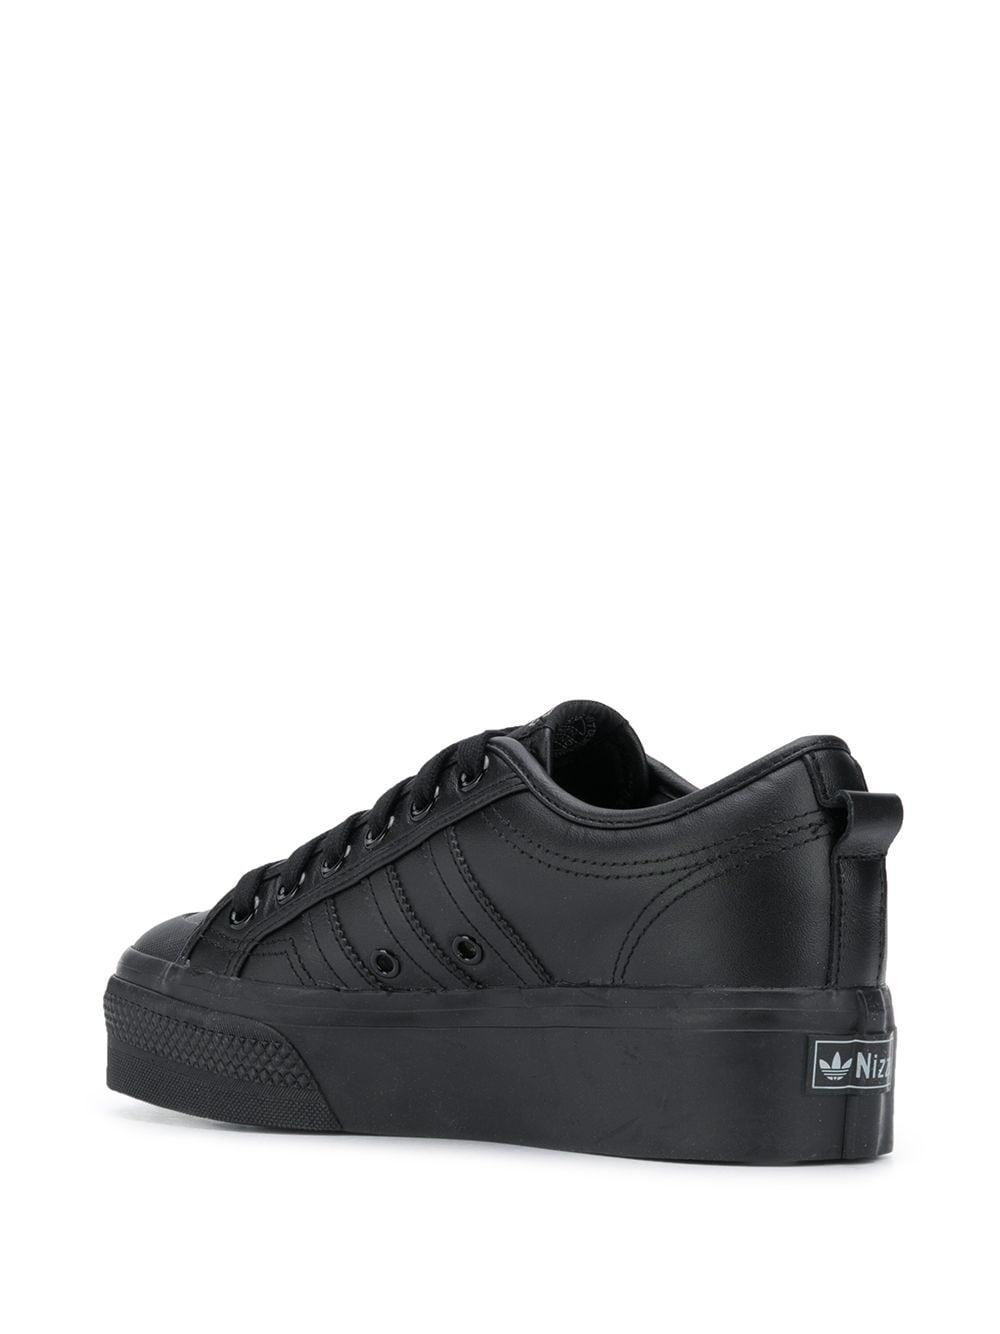 adidas Nizza Platform Sneakers in Black | Lyst